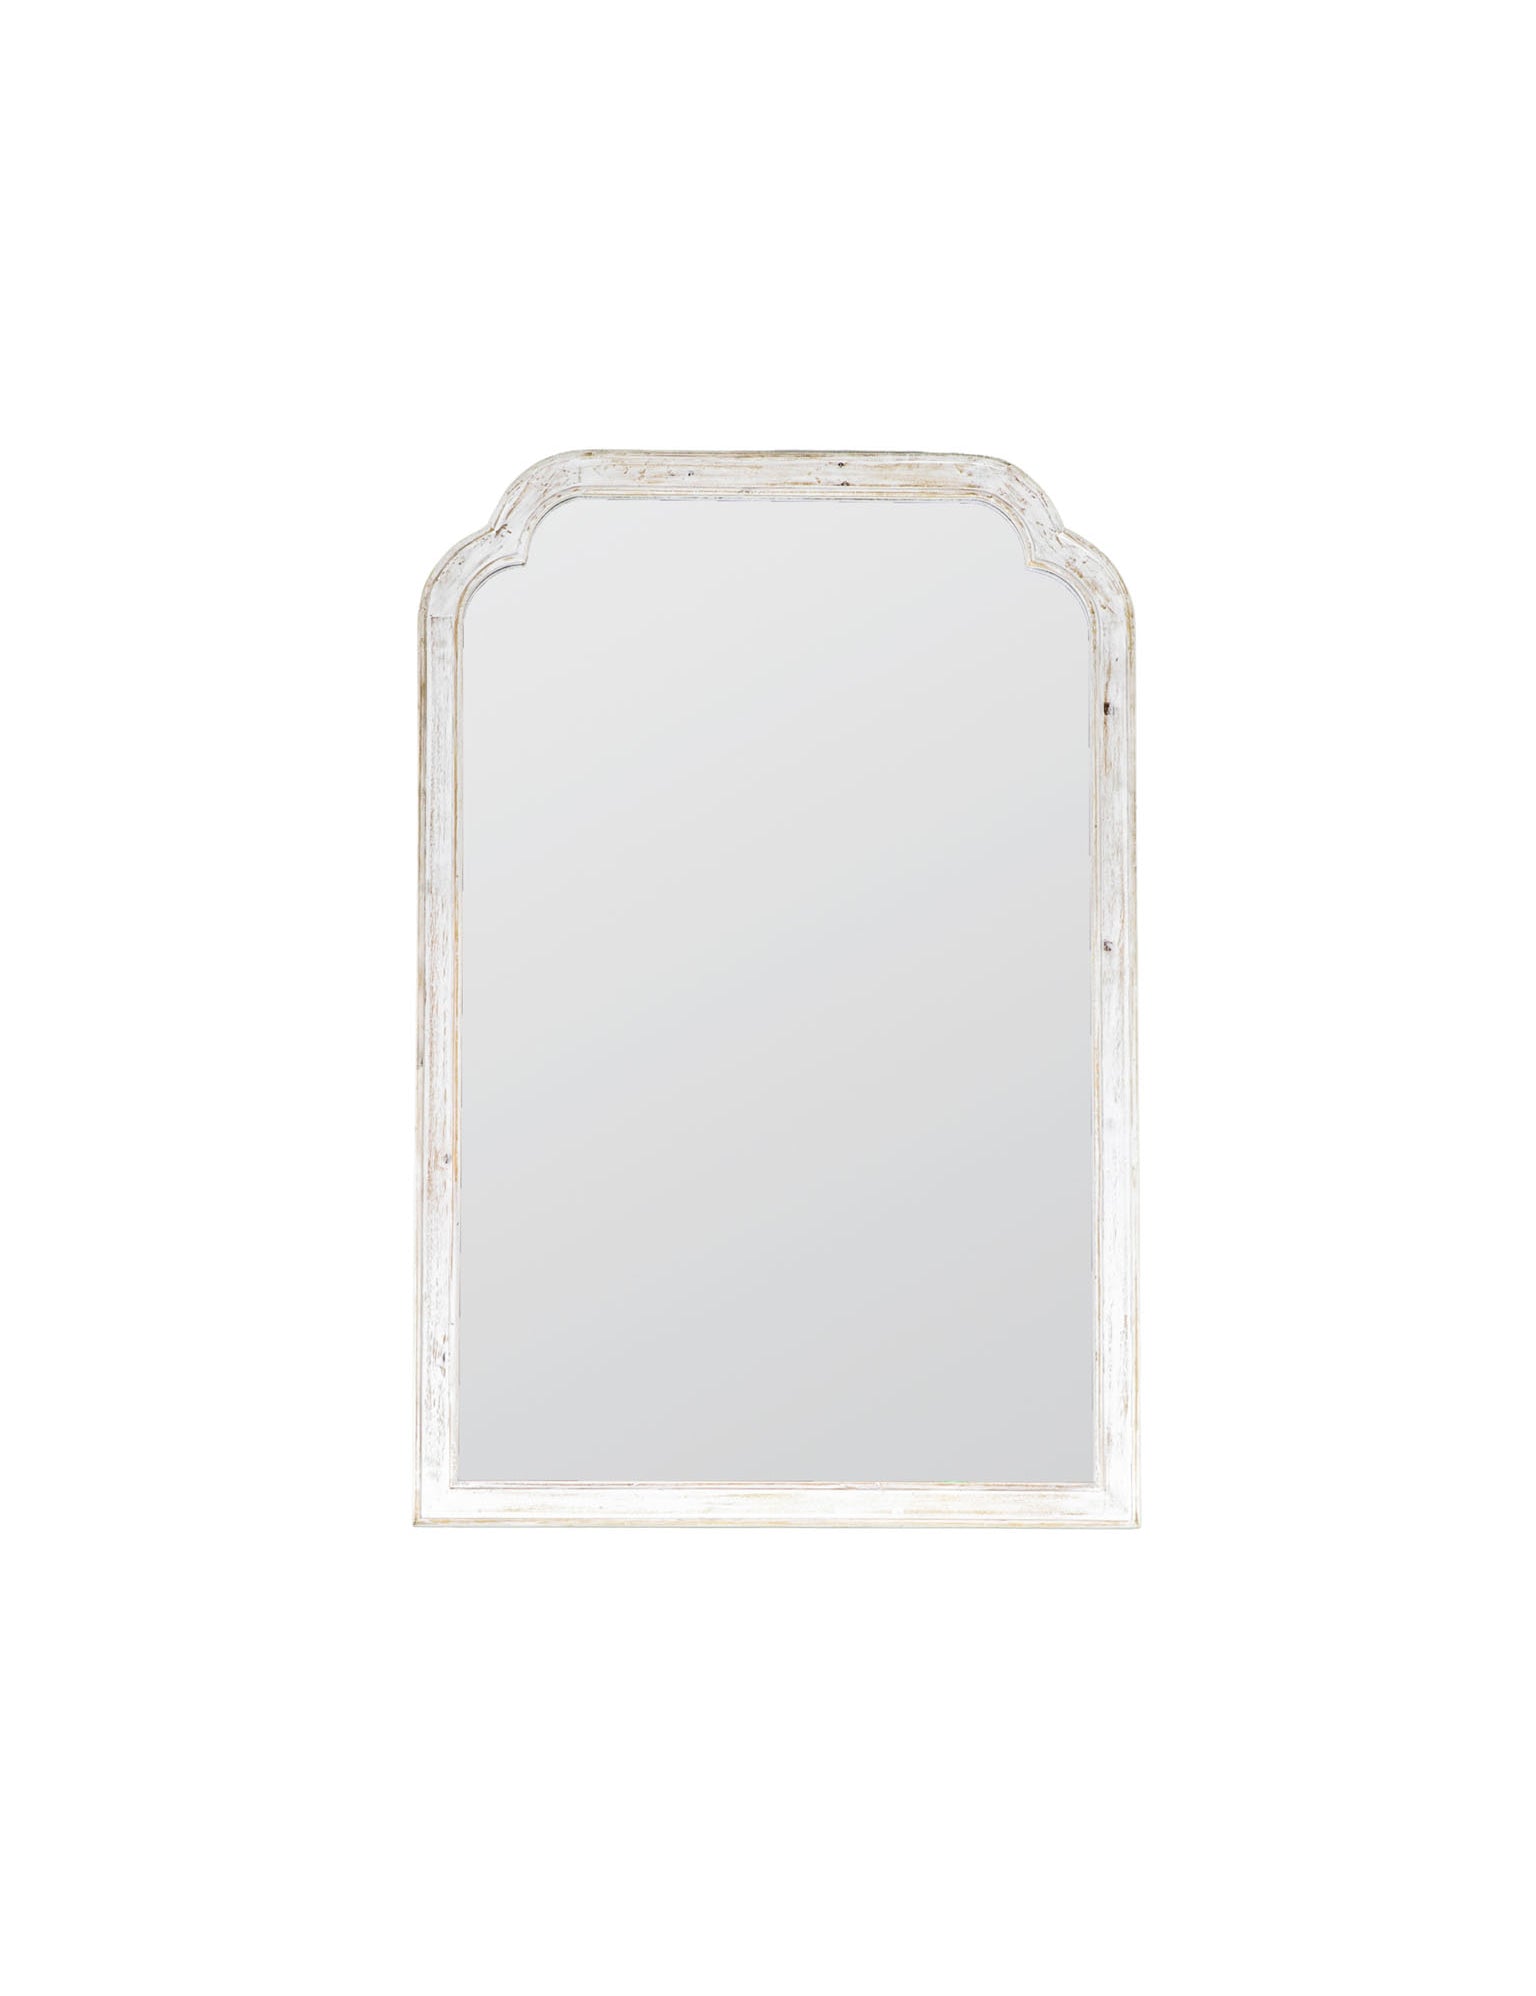 white distressed mirror